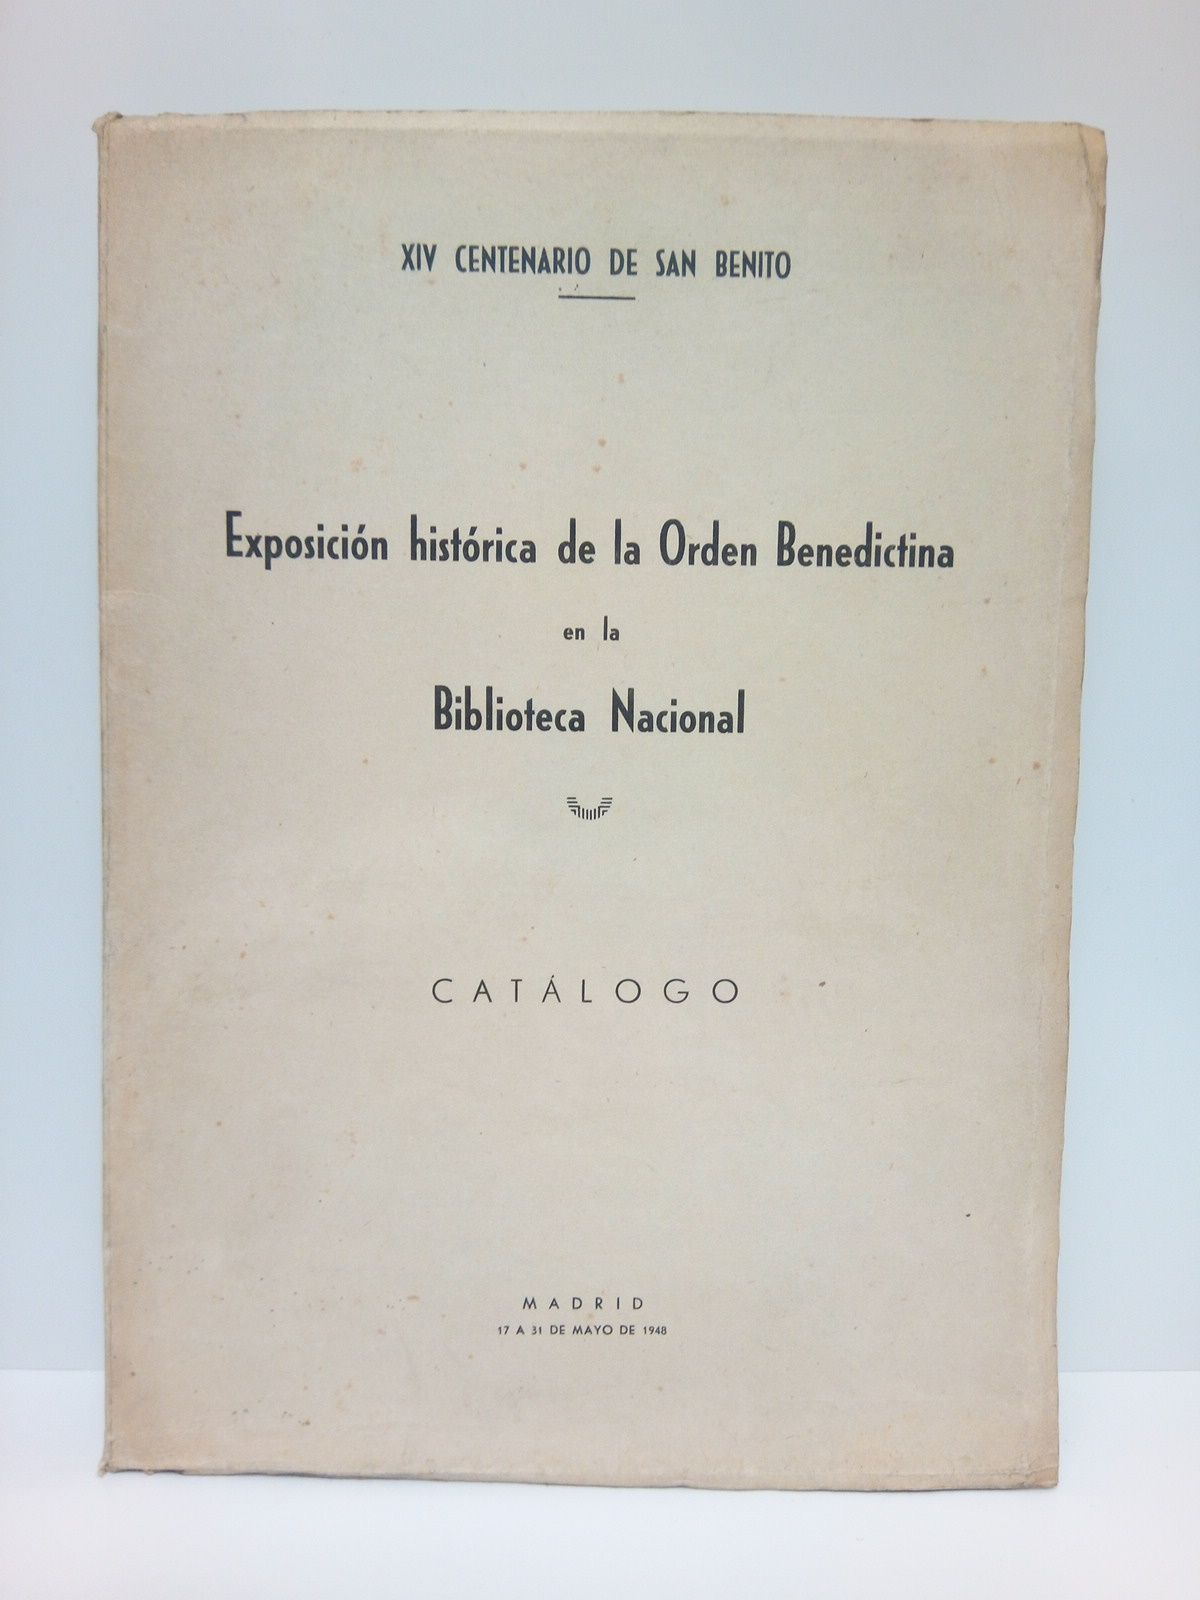 BIBLIOTECA NACIONAL - XIV Centenario de San benito. Exposicin histrica de la Orden Benedictina en la Biblioteca Nacional. Catlogo. (Del 17 al 31 de mayo de 1948)